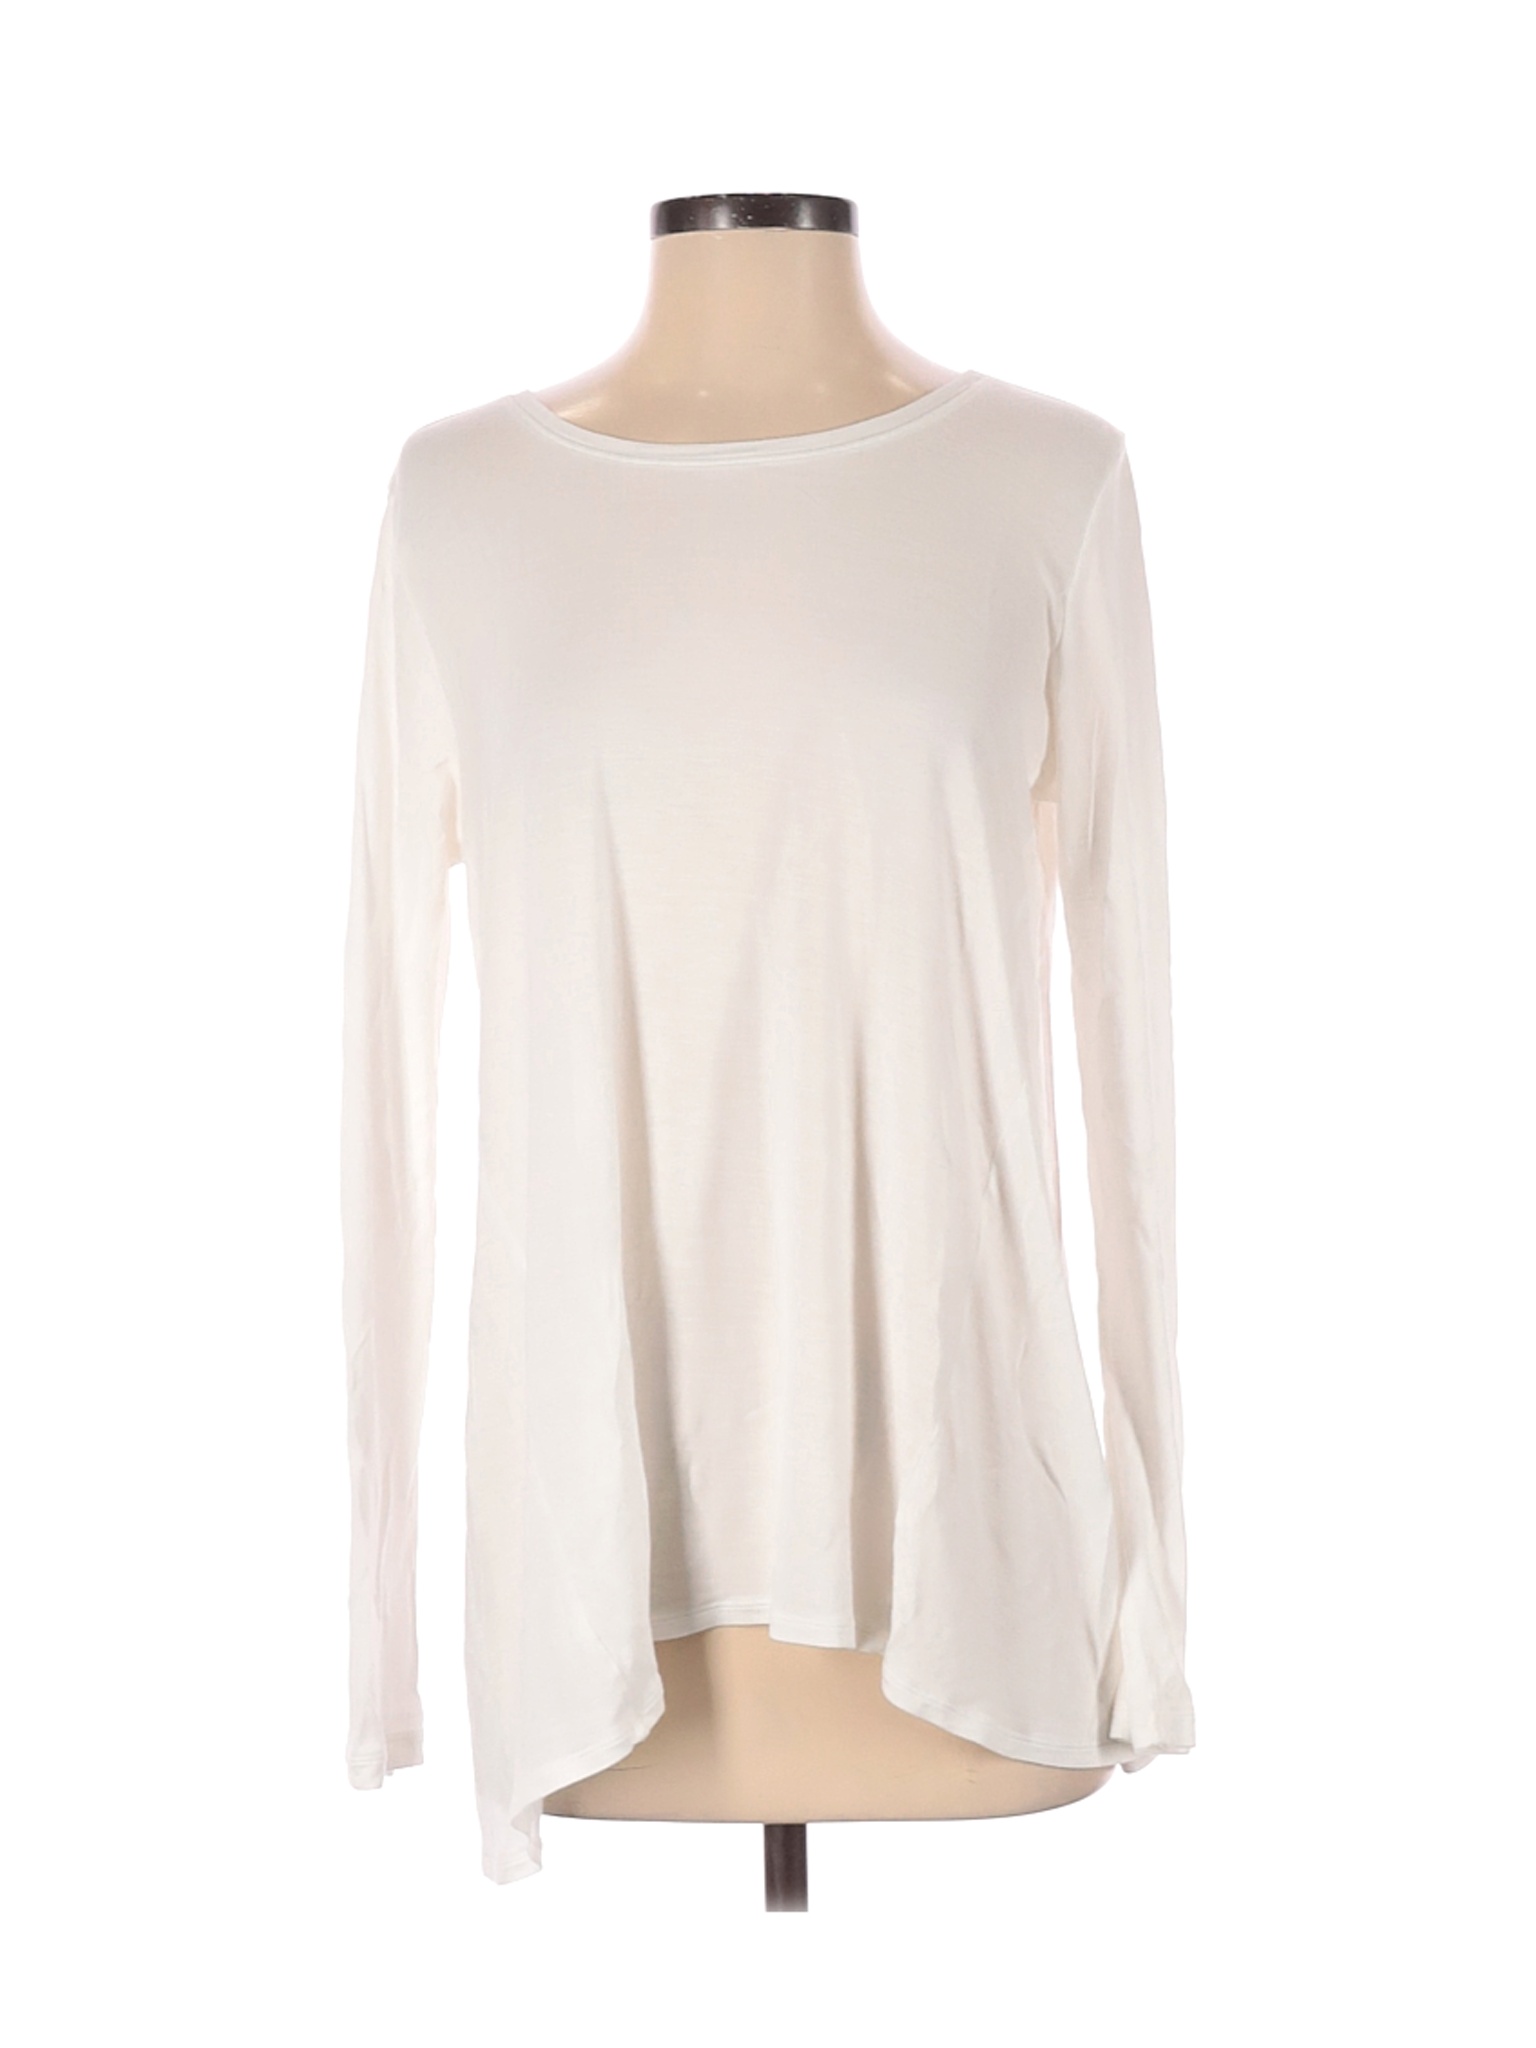 CAbi Women Ivory Long Sleeve T-Shirt S | eBay